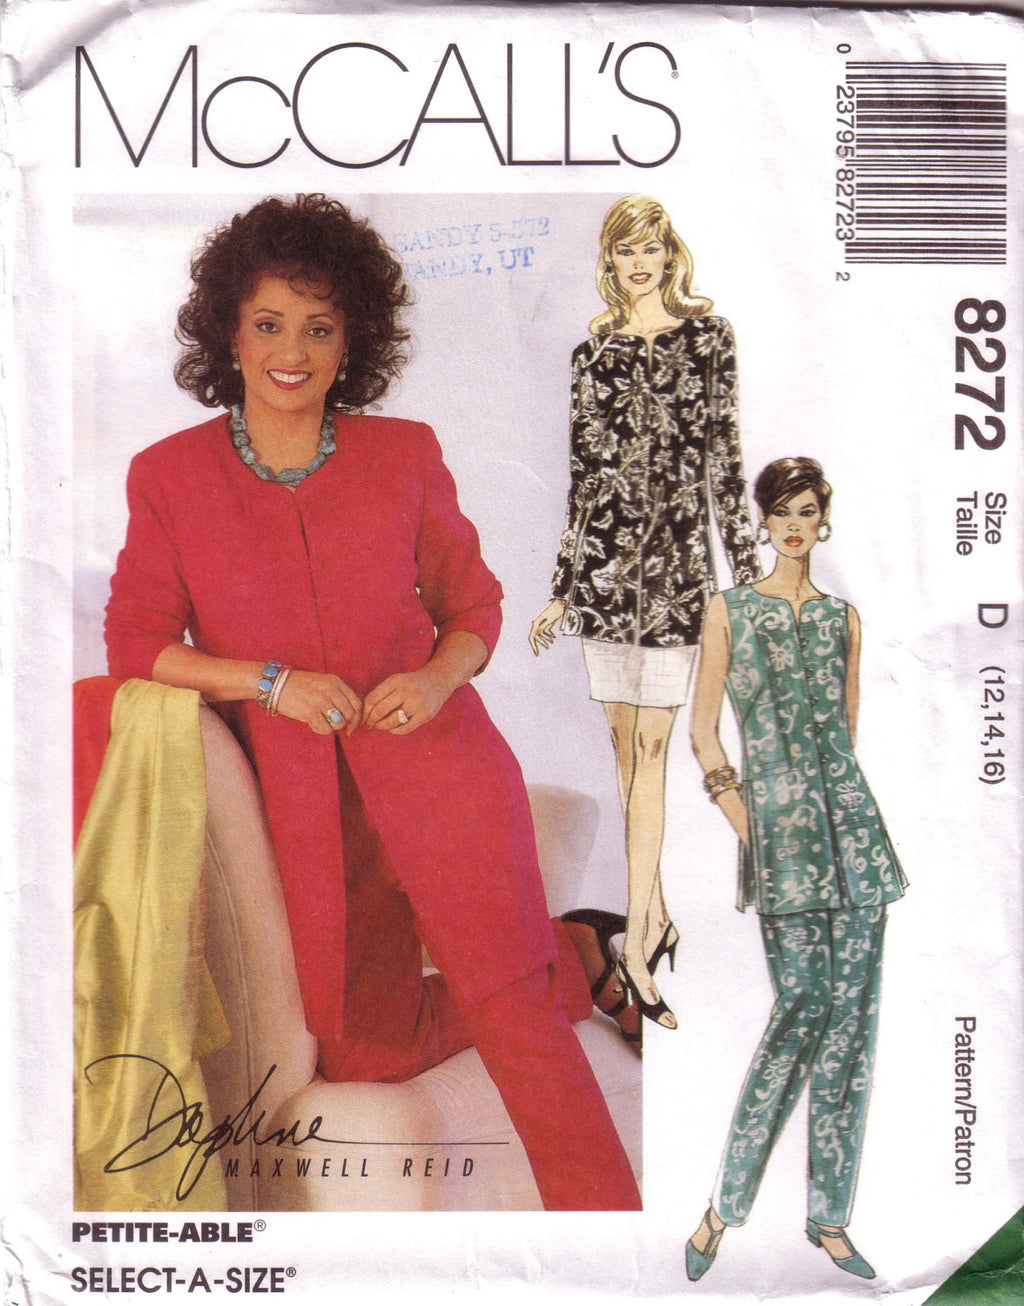 Vintage McCalls 8272, Designer Daphne Maxwell Reid, Misses Jacket, Vest, Skirt, Size 12, 14, 16 - Couture Service  - 1